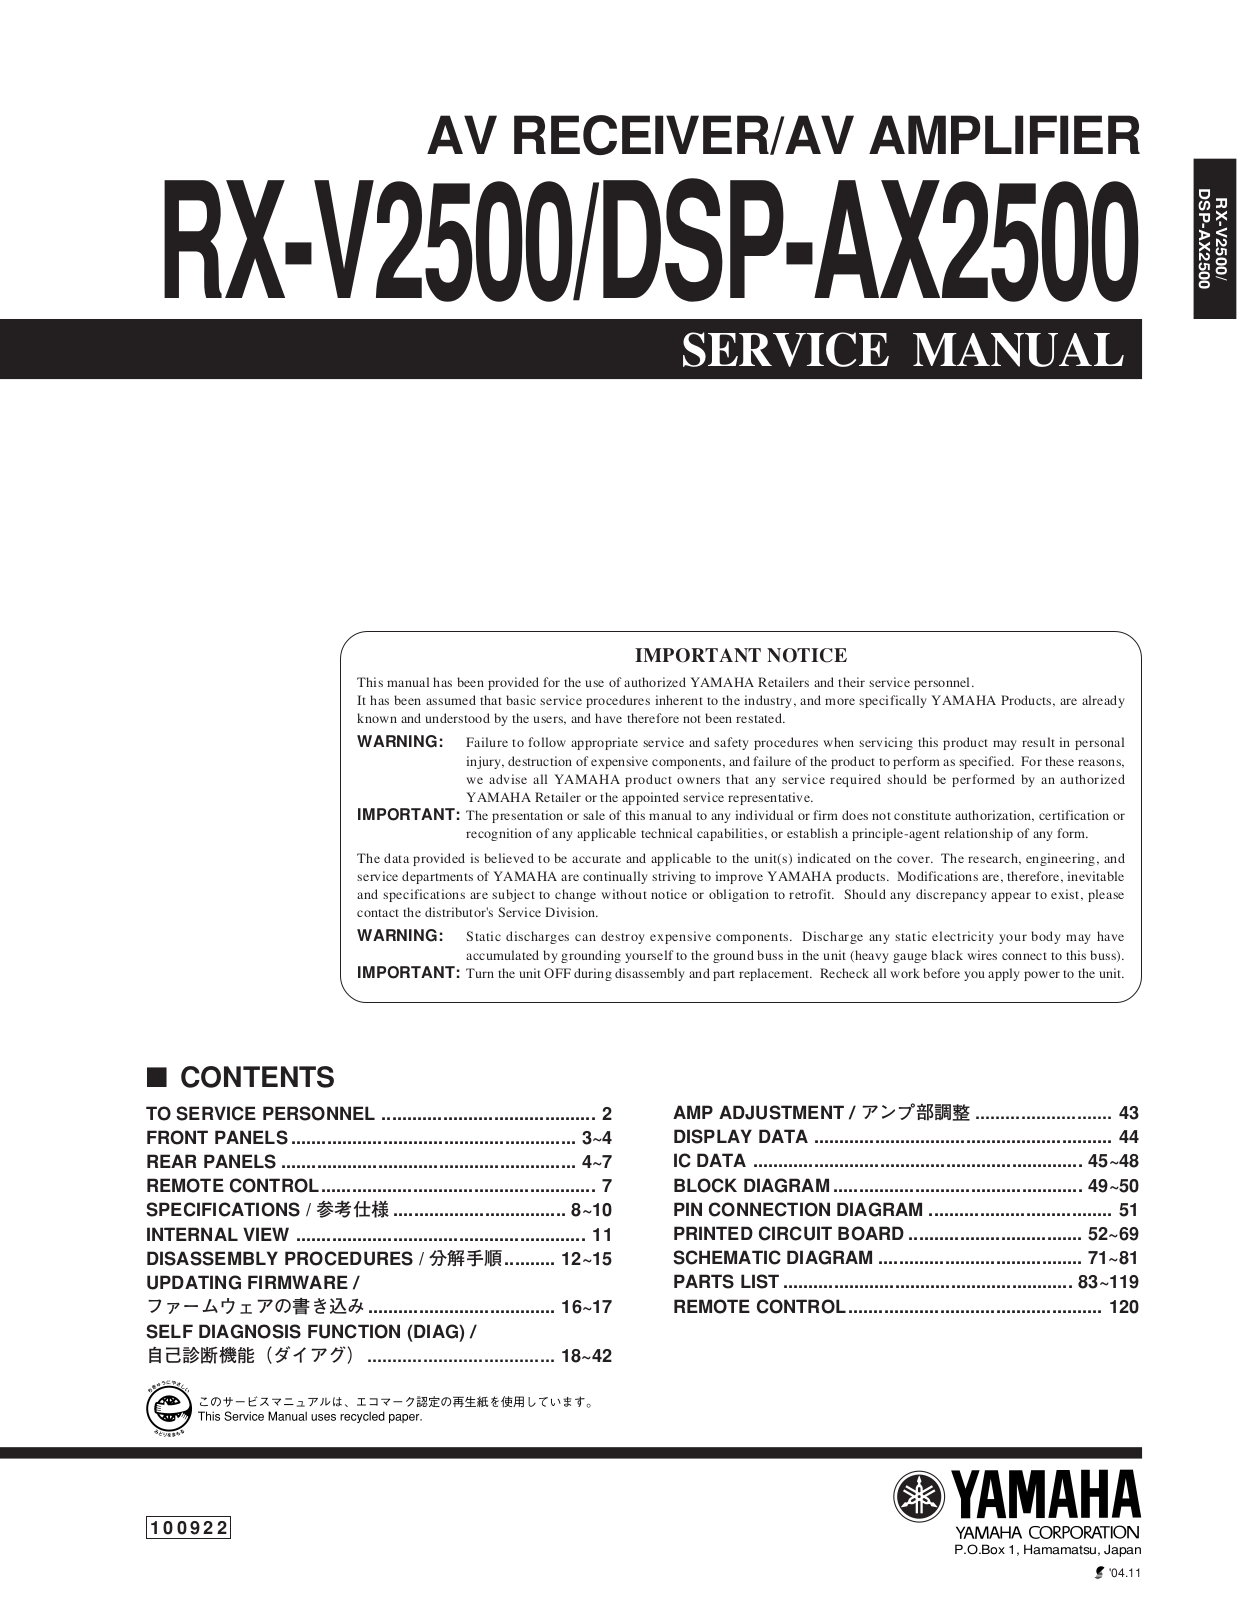 Yamaha RXV-2500, DSPAX-2500 Service manual